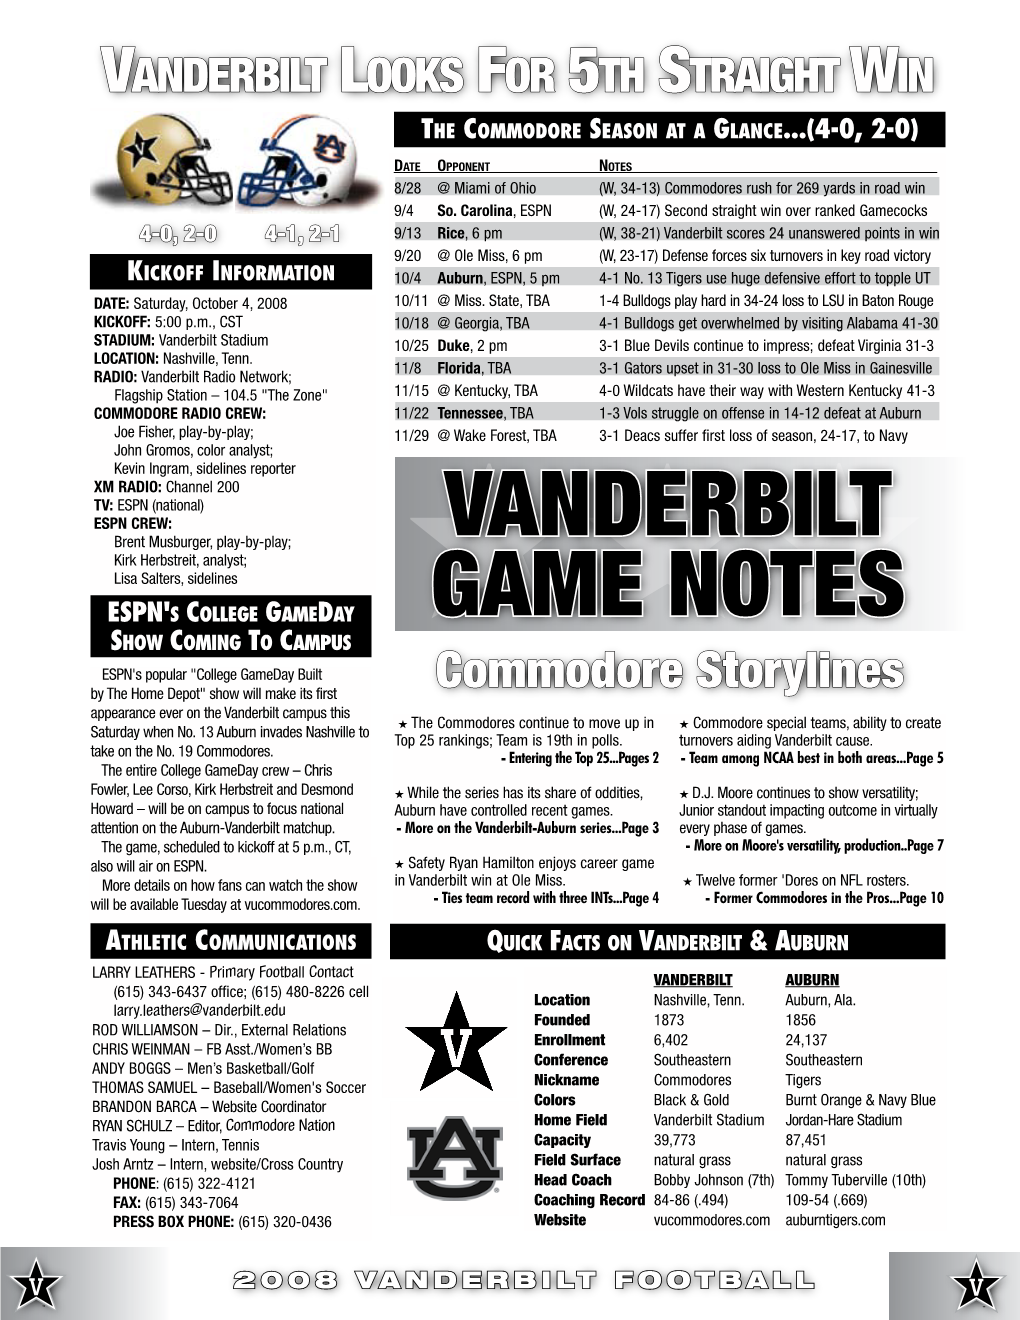 VANDERBILT Game Notes Vanderbilt Enter S to P 25 Nati O Nal Po Ll S